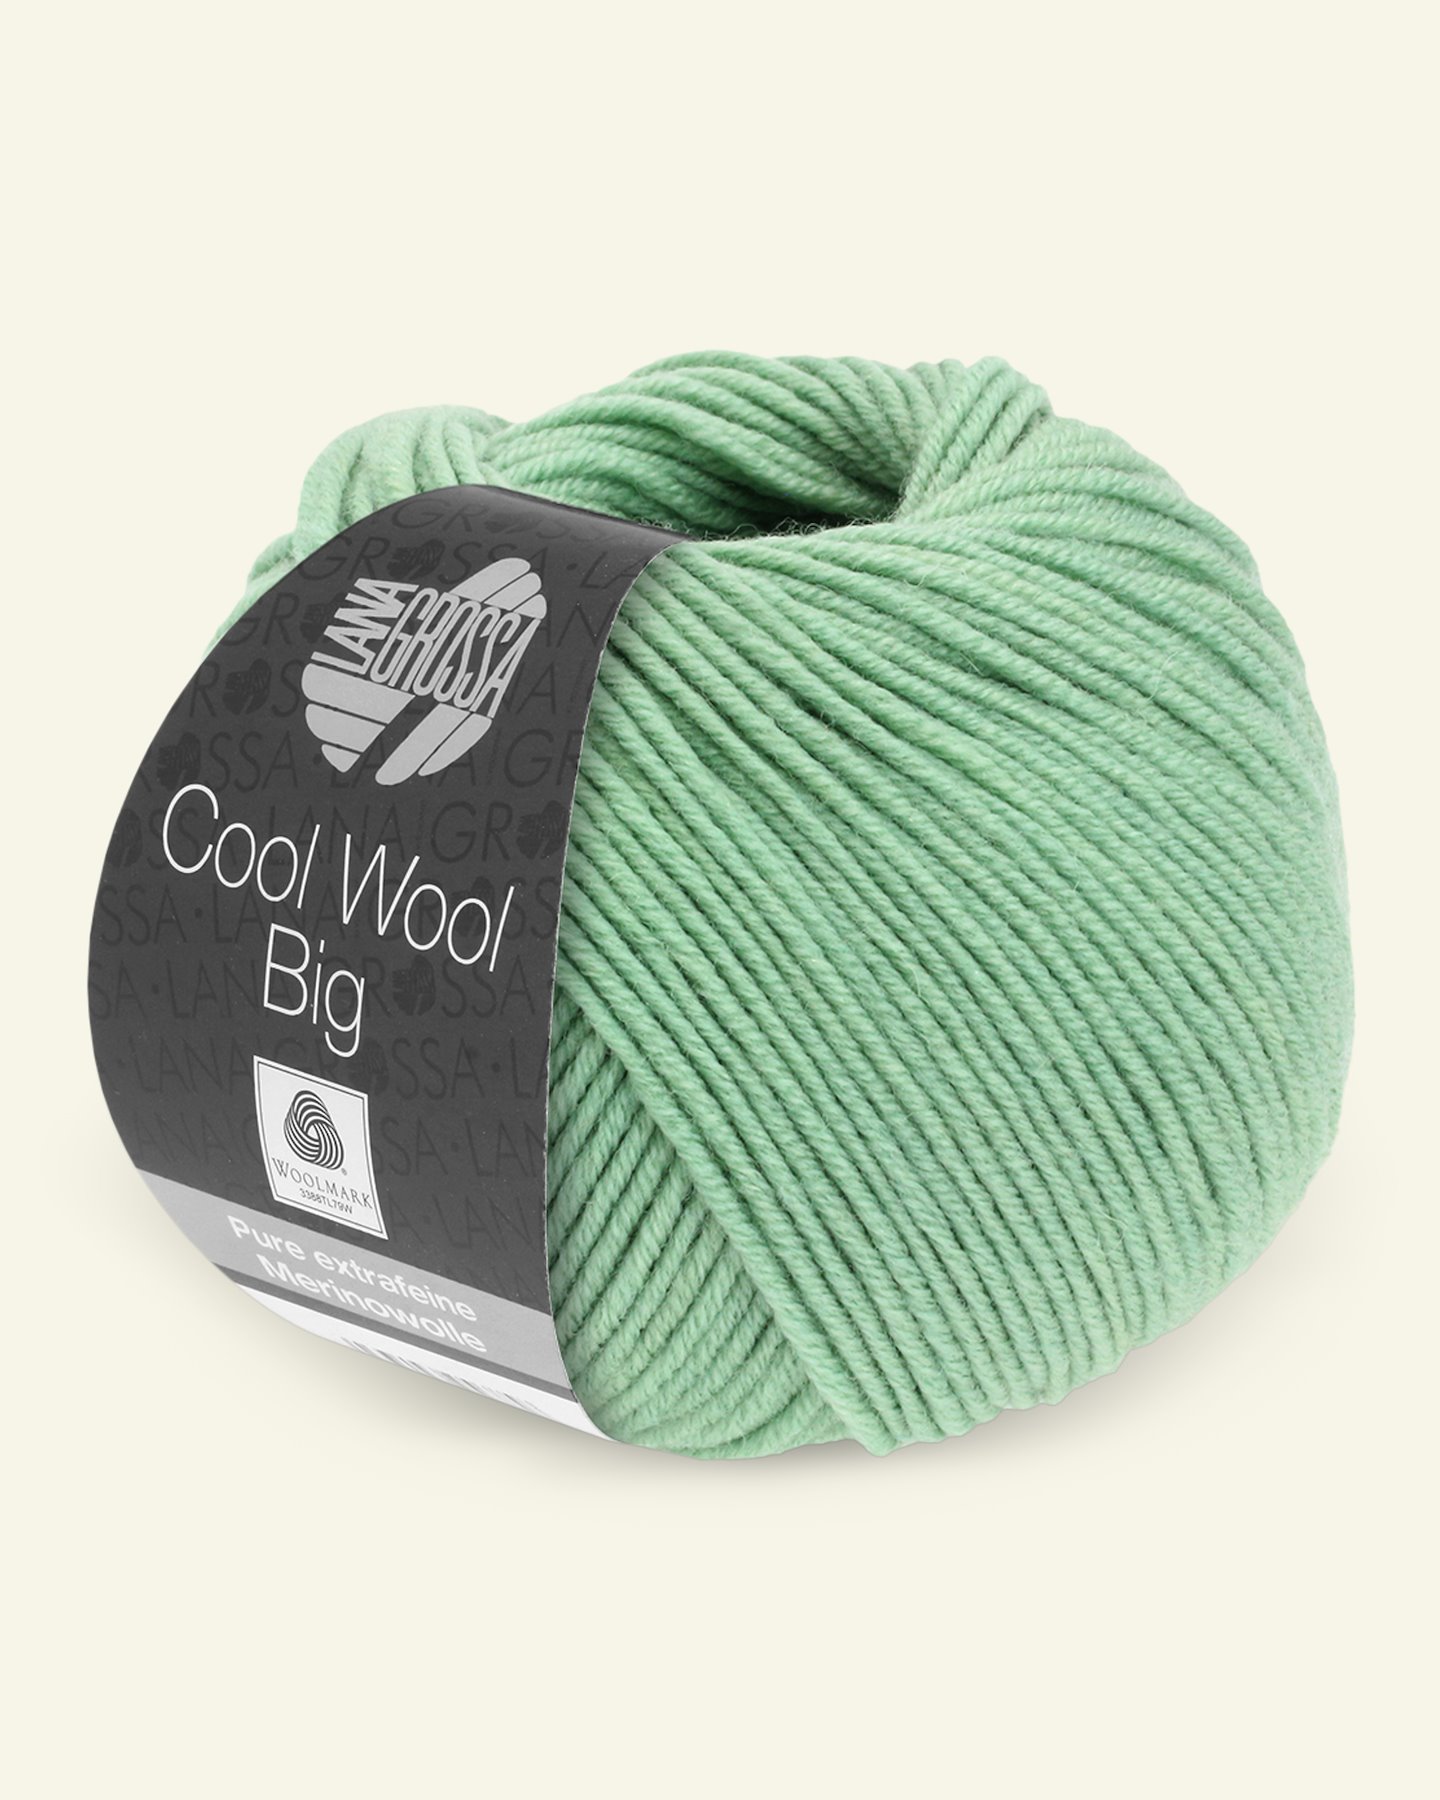 Lana Grossa, extrafine merino wool yarn "Cool Wool Big", aqua green 90001107_pack